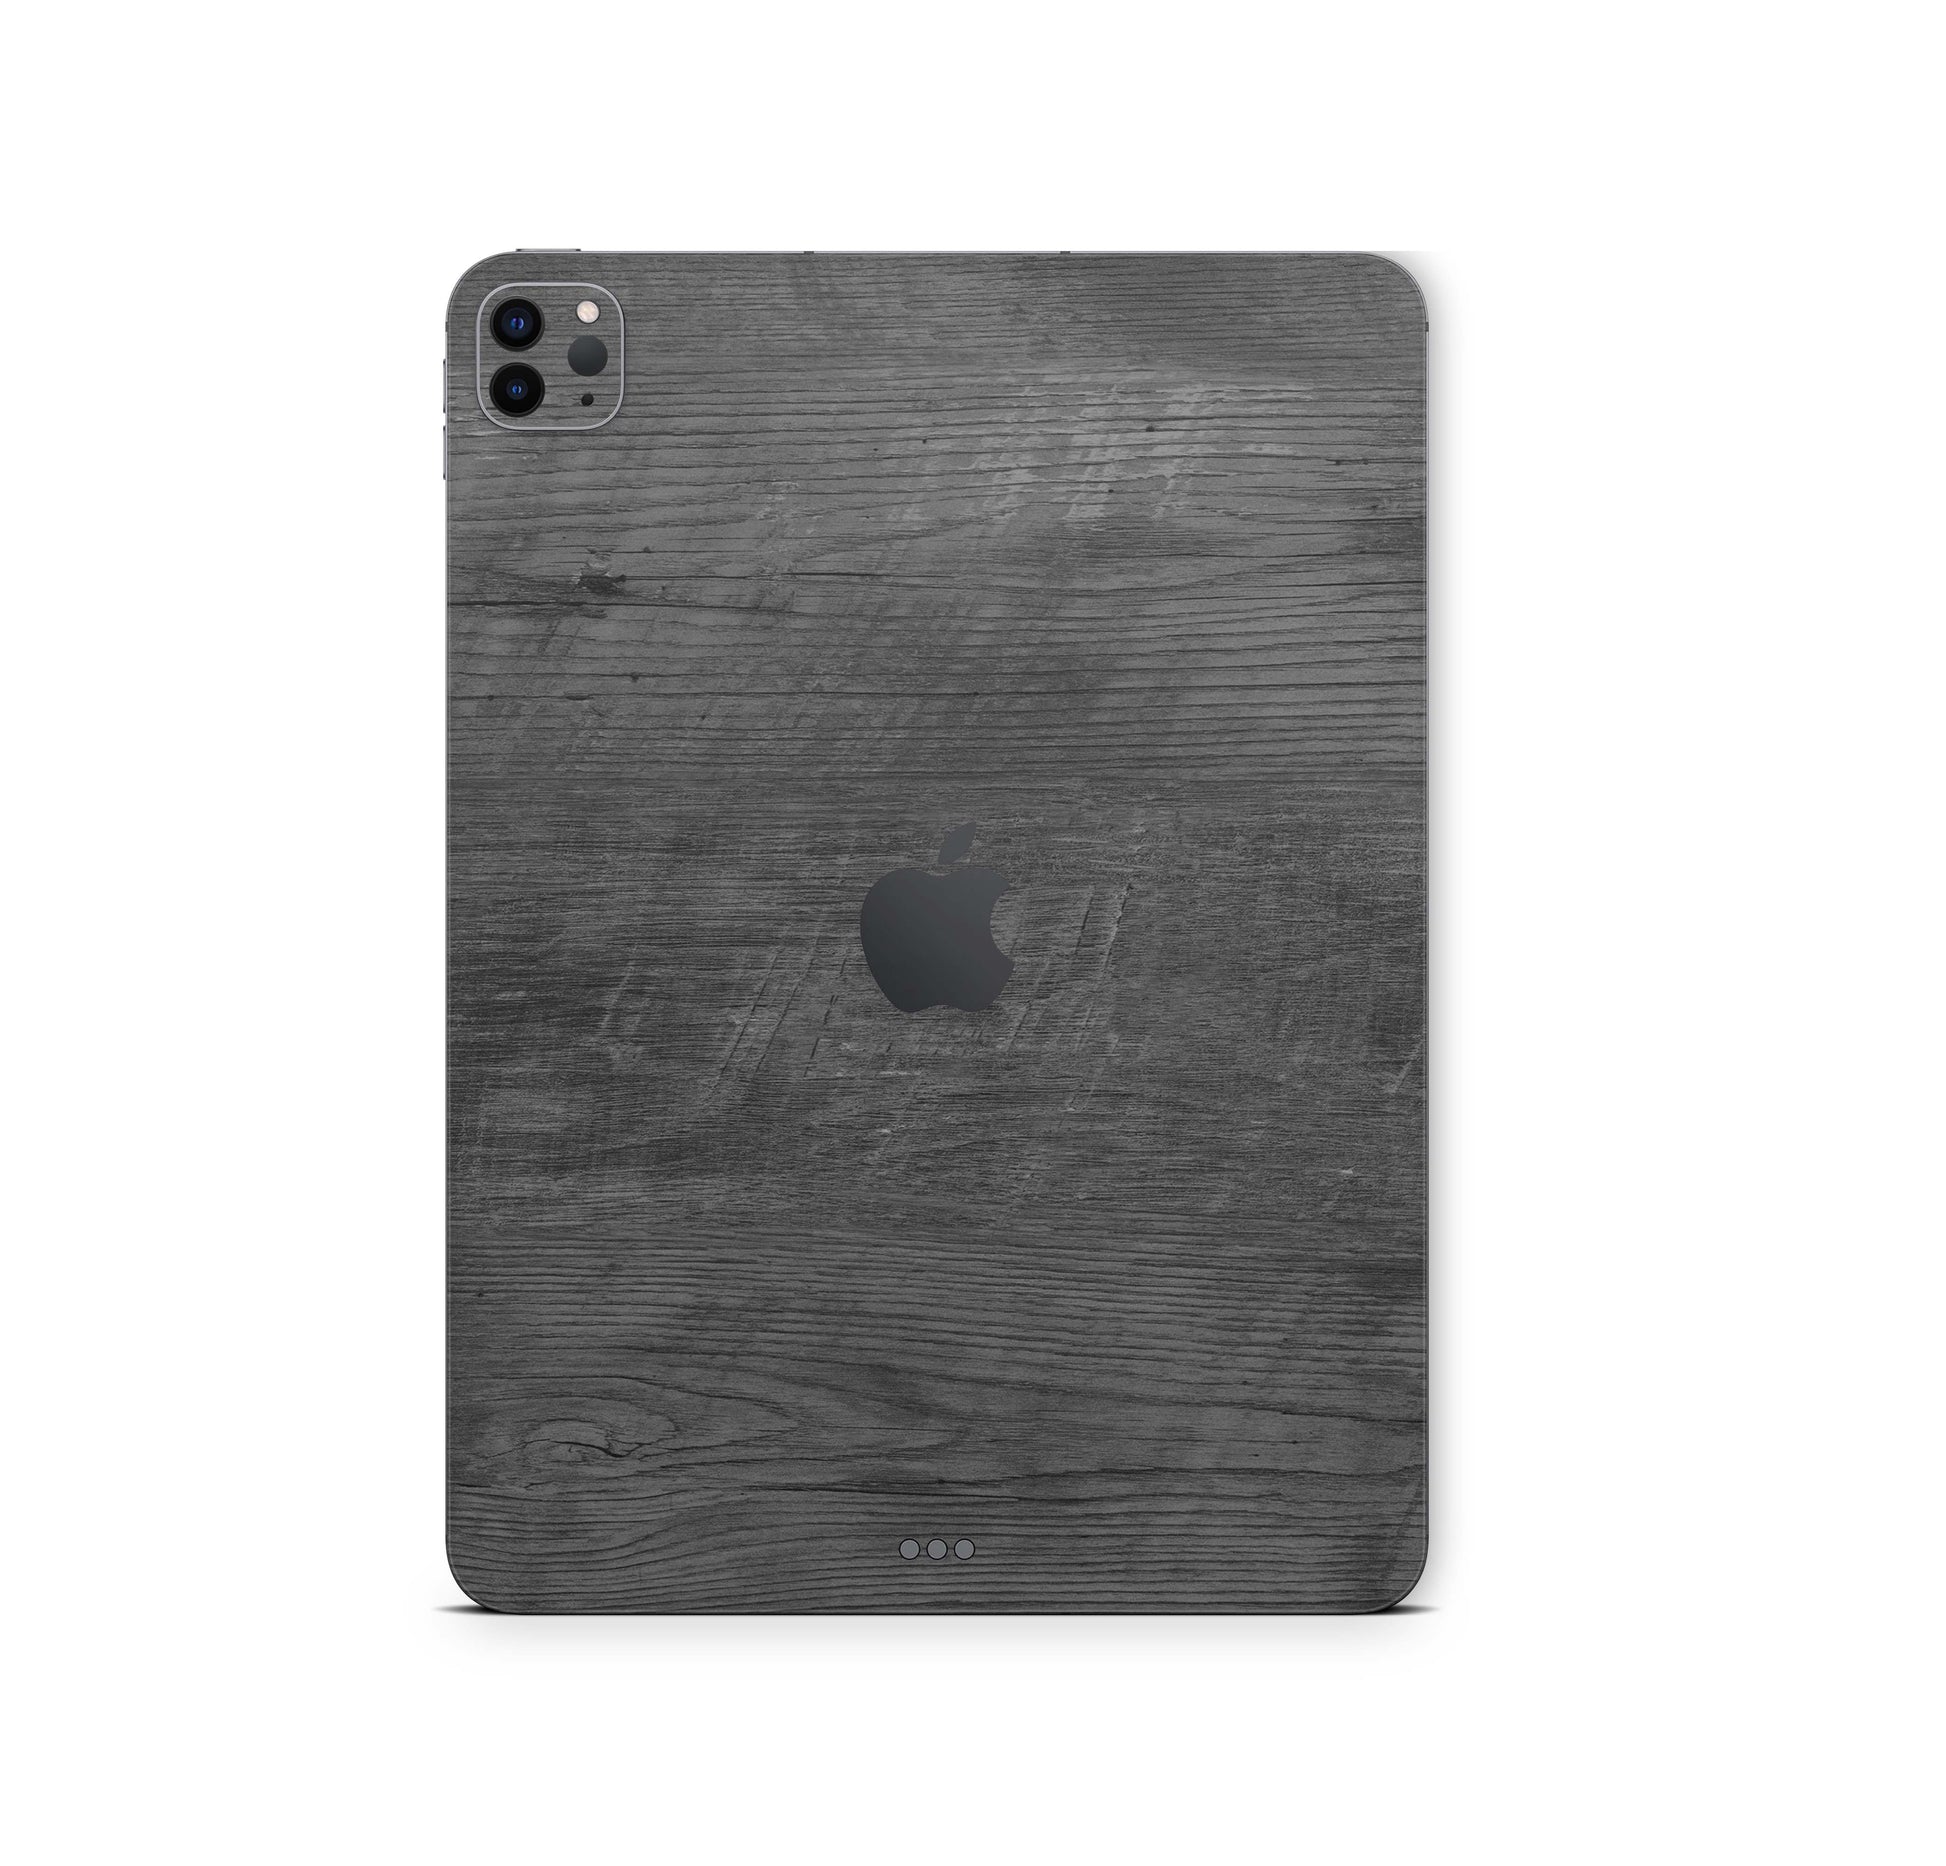 iPad Pro Skin 11" 3.Generation M1 2021 Design Cover Folie Vinyl Skins & Wraps Aufkleber Skins4u Black-Woodgrain  